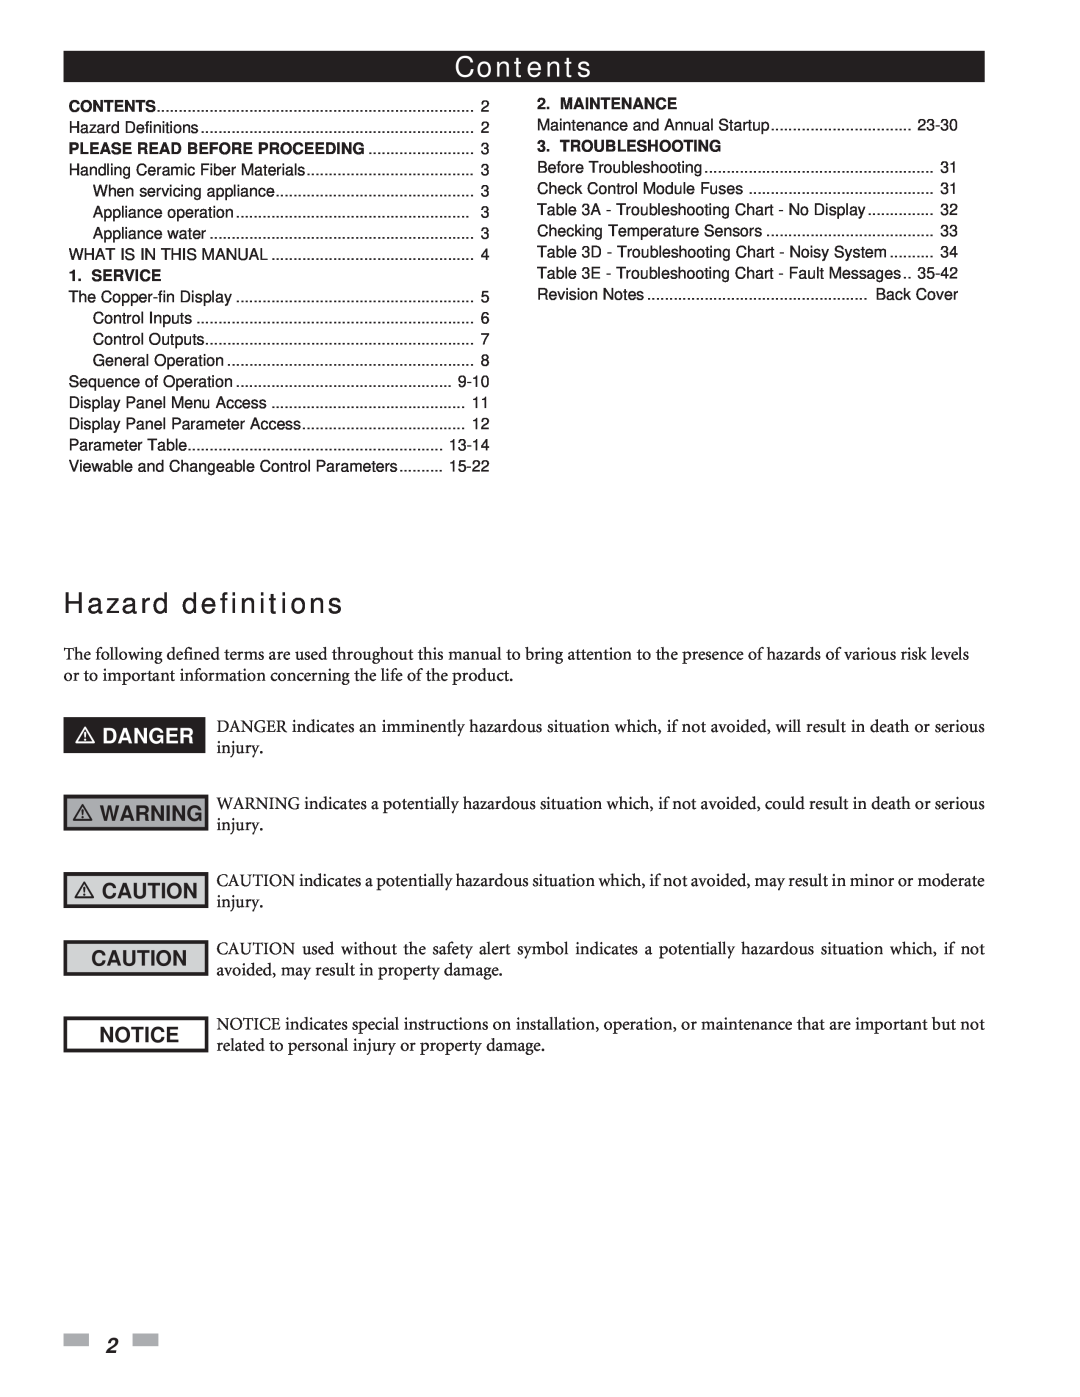 Lochinvar 402 - 2072, 502 - 2072 service manual Hazard definitions, Danger, Contents 